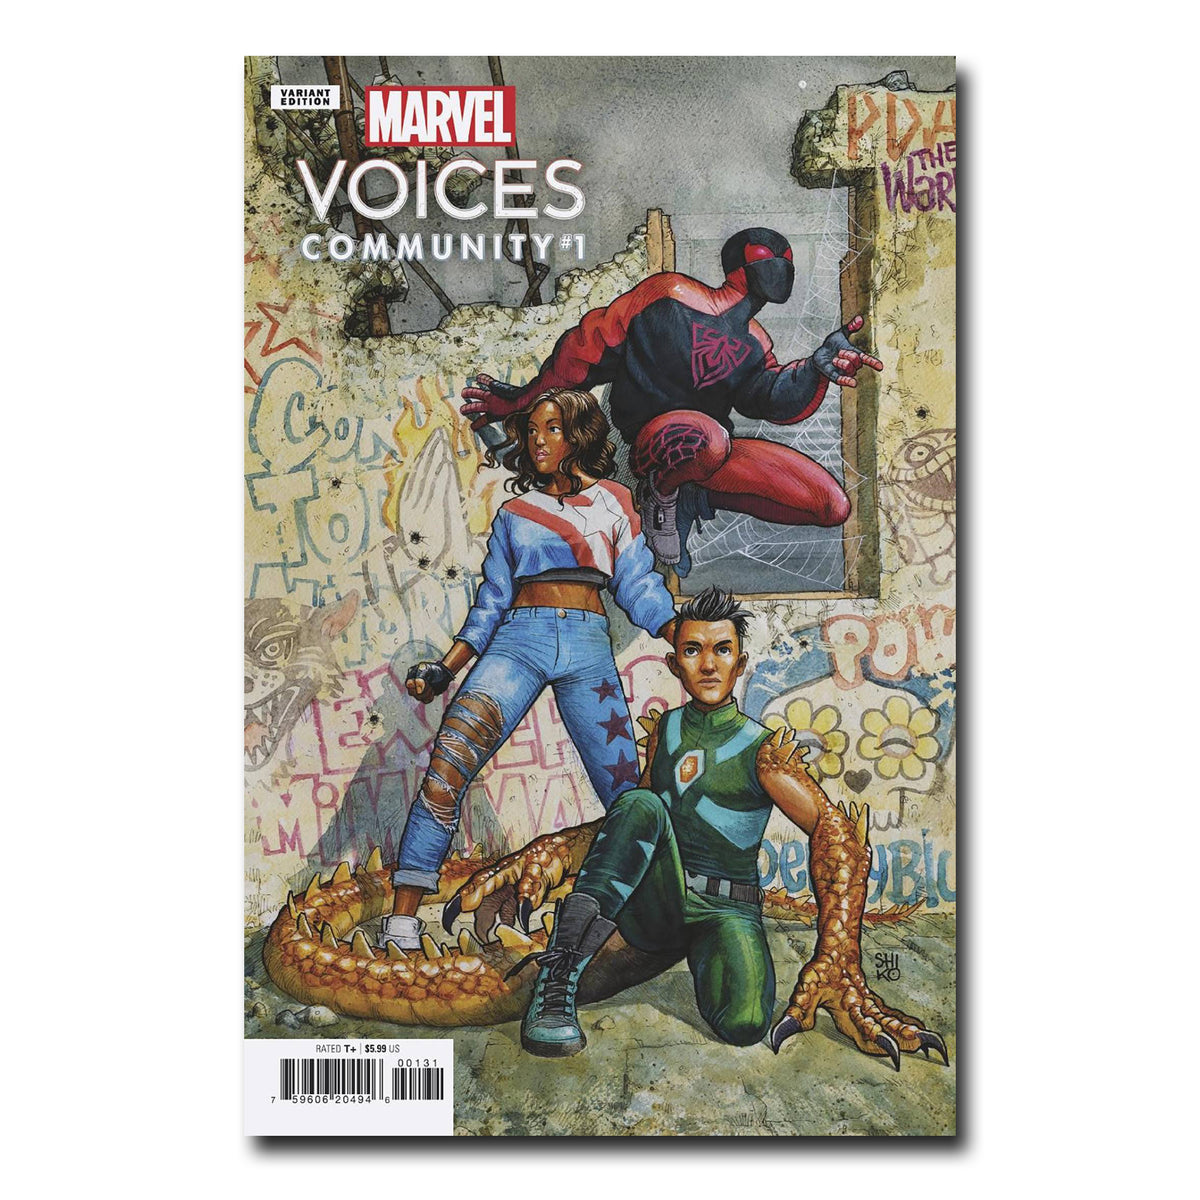 Marvel Voices Community #1 Cover Variant SHIKO FINALSALE